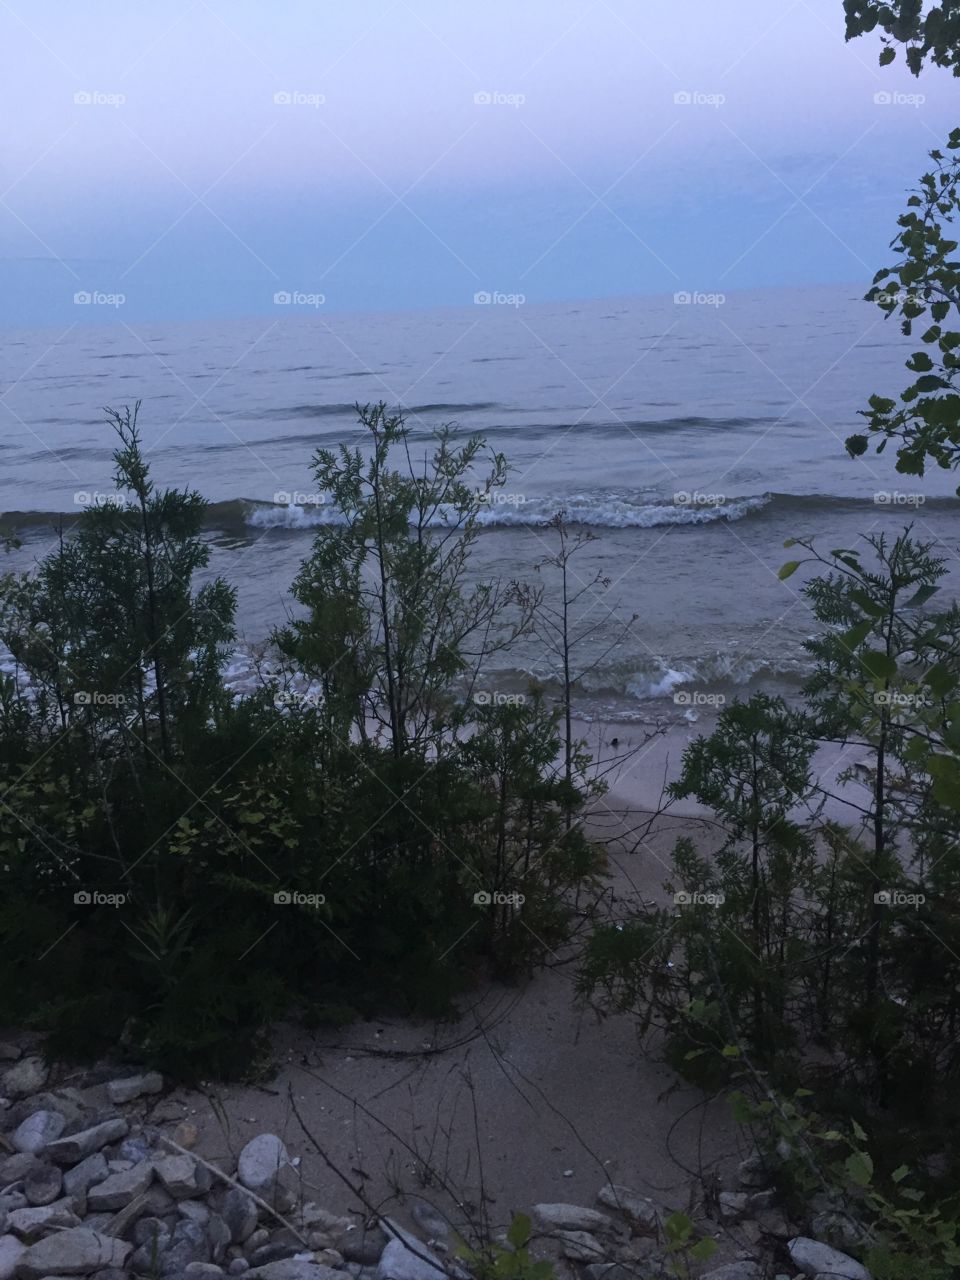 Beside Lake Michigan 